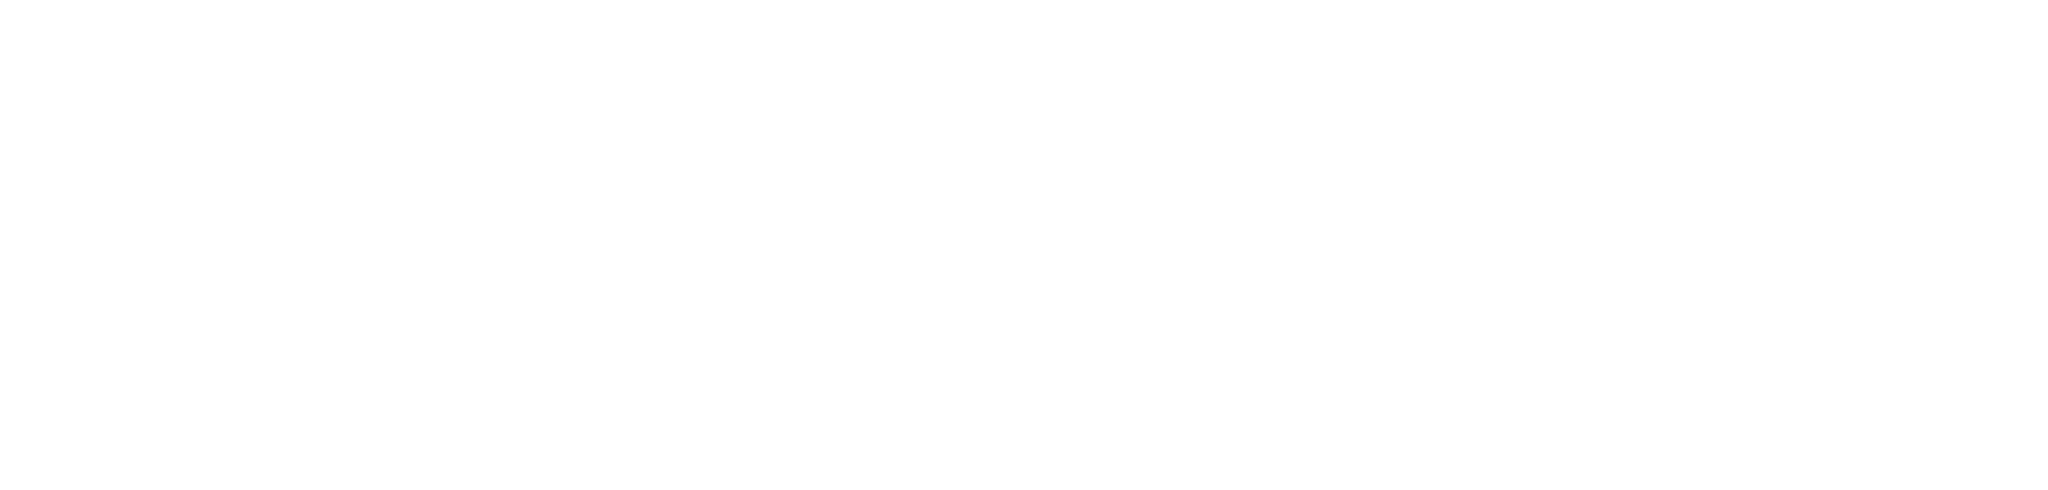 Grundmann-Maschinenbau Logo